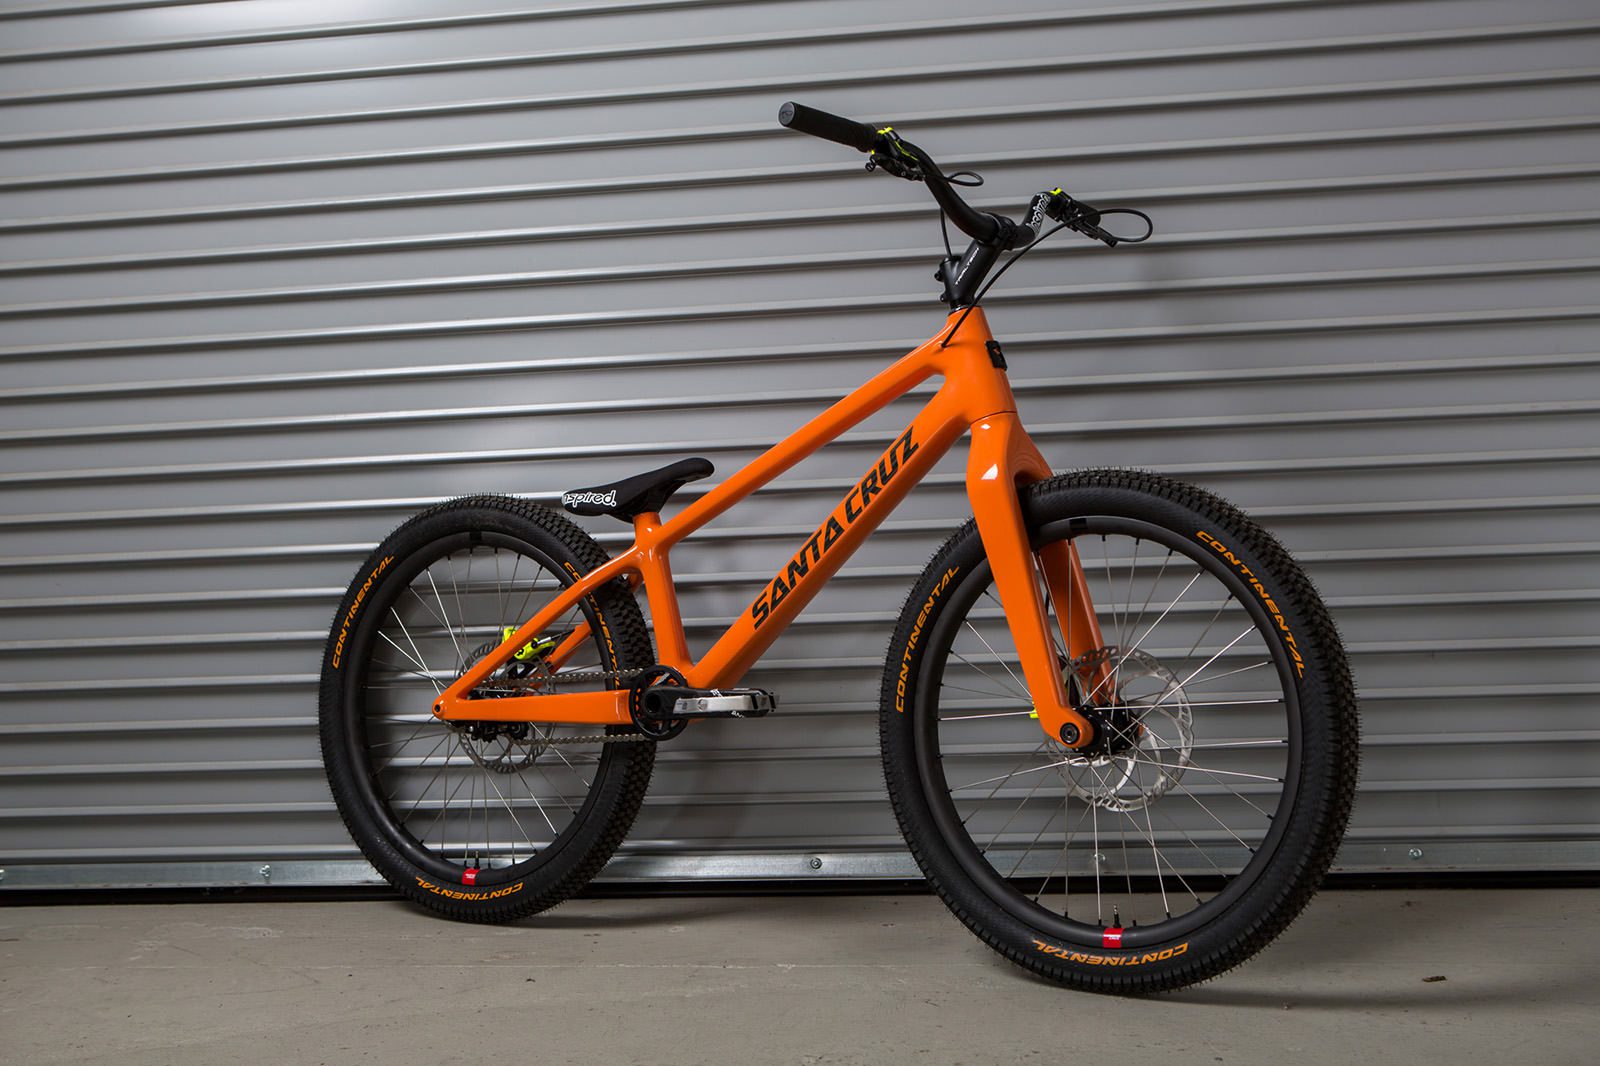 Santa Cruz whips up custom U.S. made carbon trials bike for Danny MacAskill